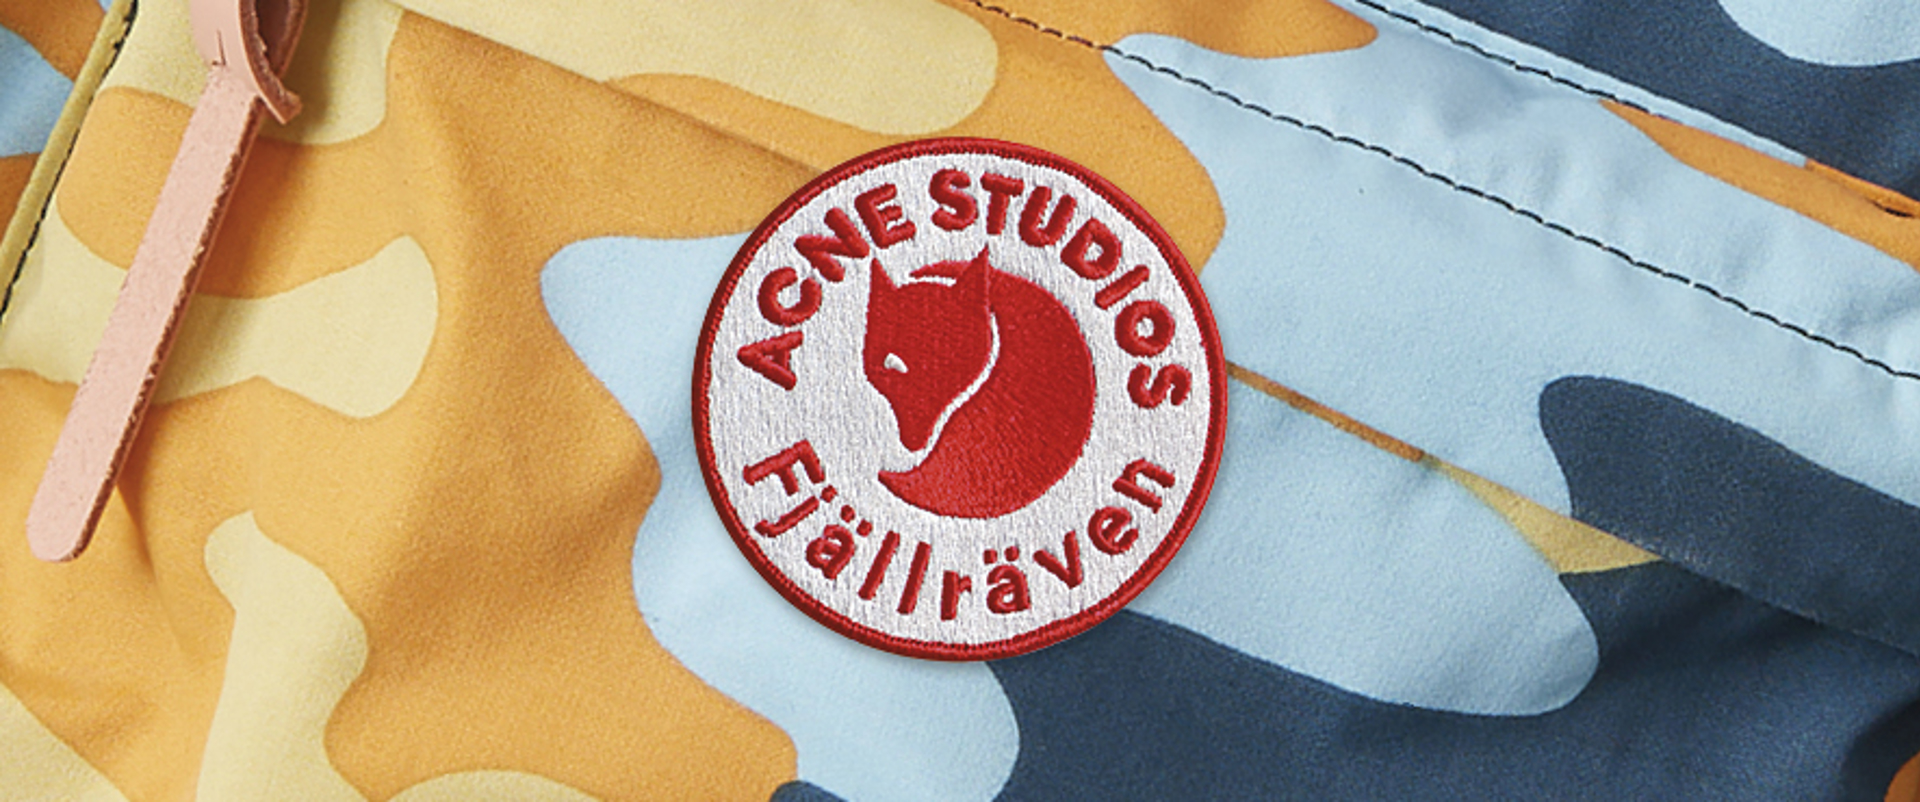 Closeup of Acne Studios and Fjallraven cobranded logo